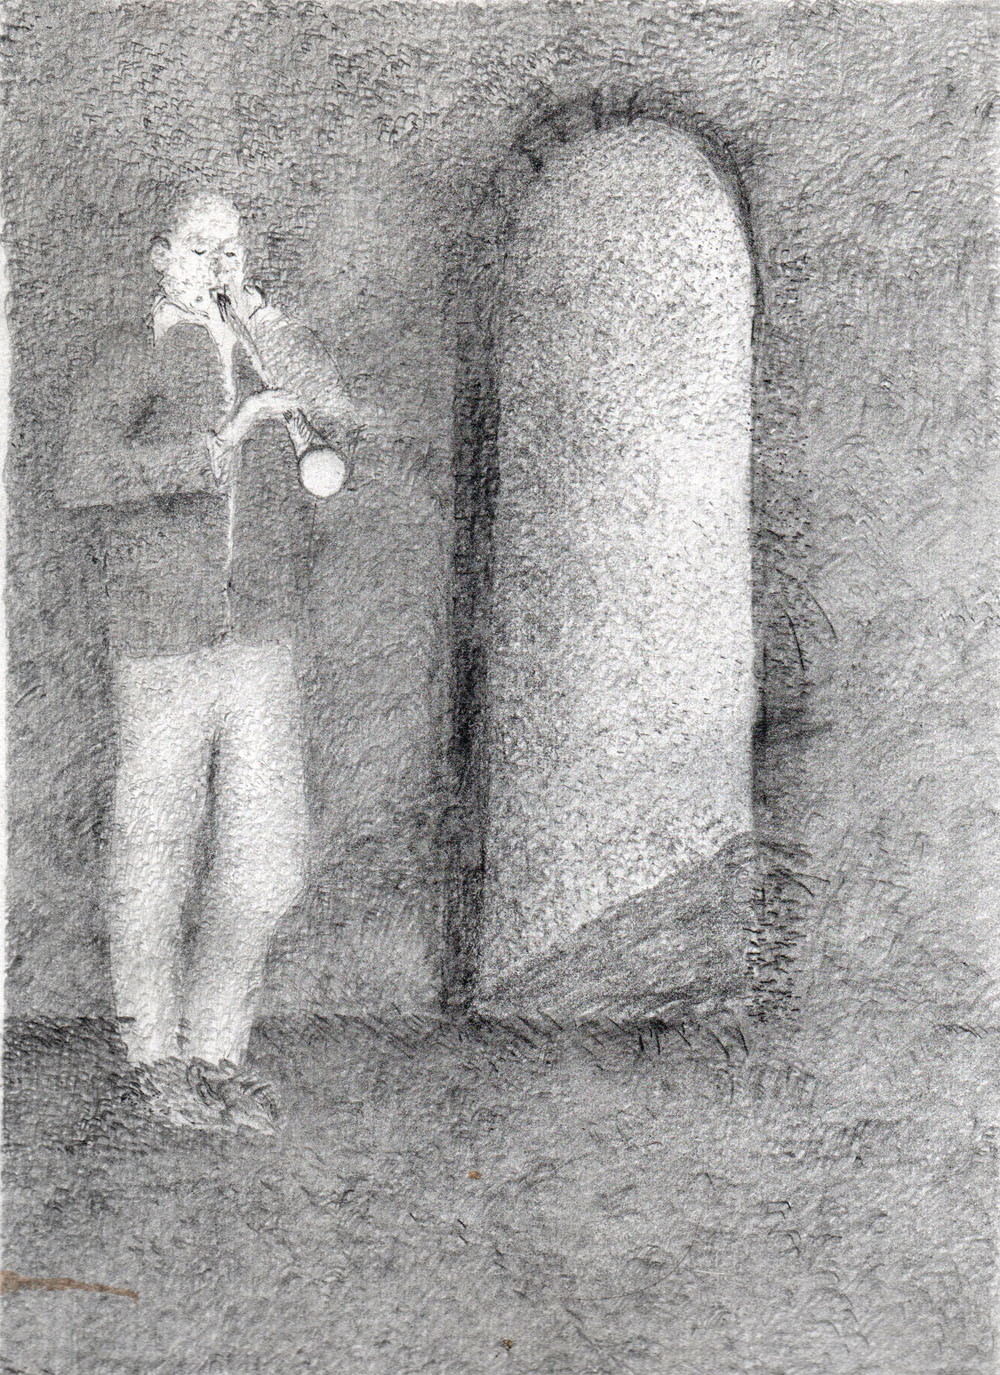 clarenet musician illustration